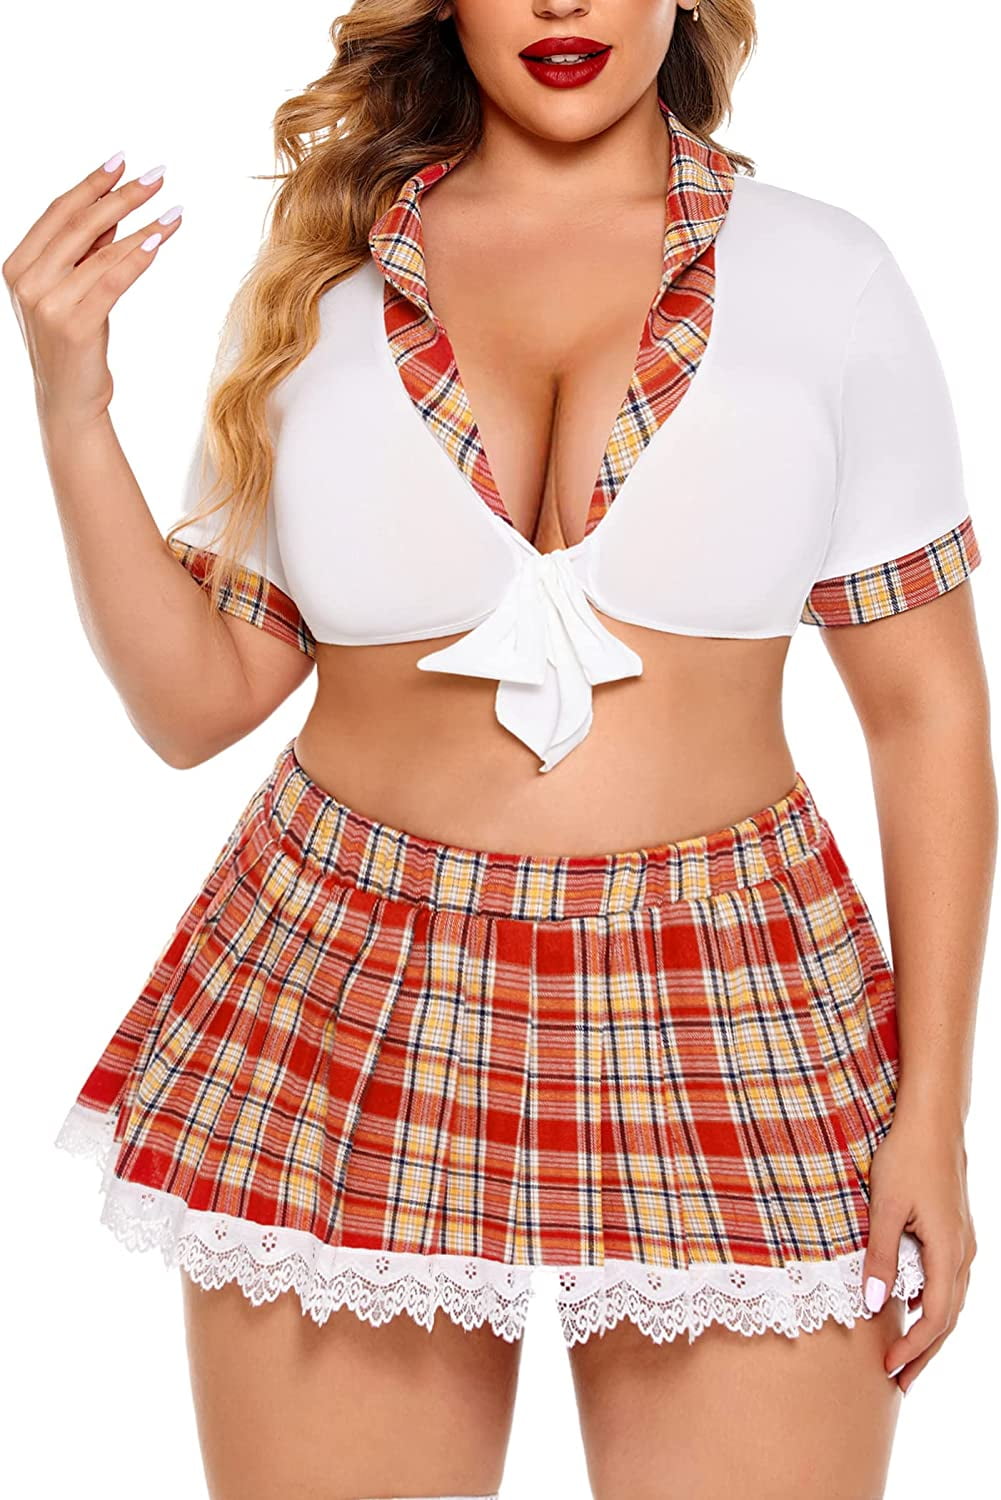 chris coelho recommends naughty school girl lingerie pic